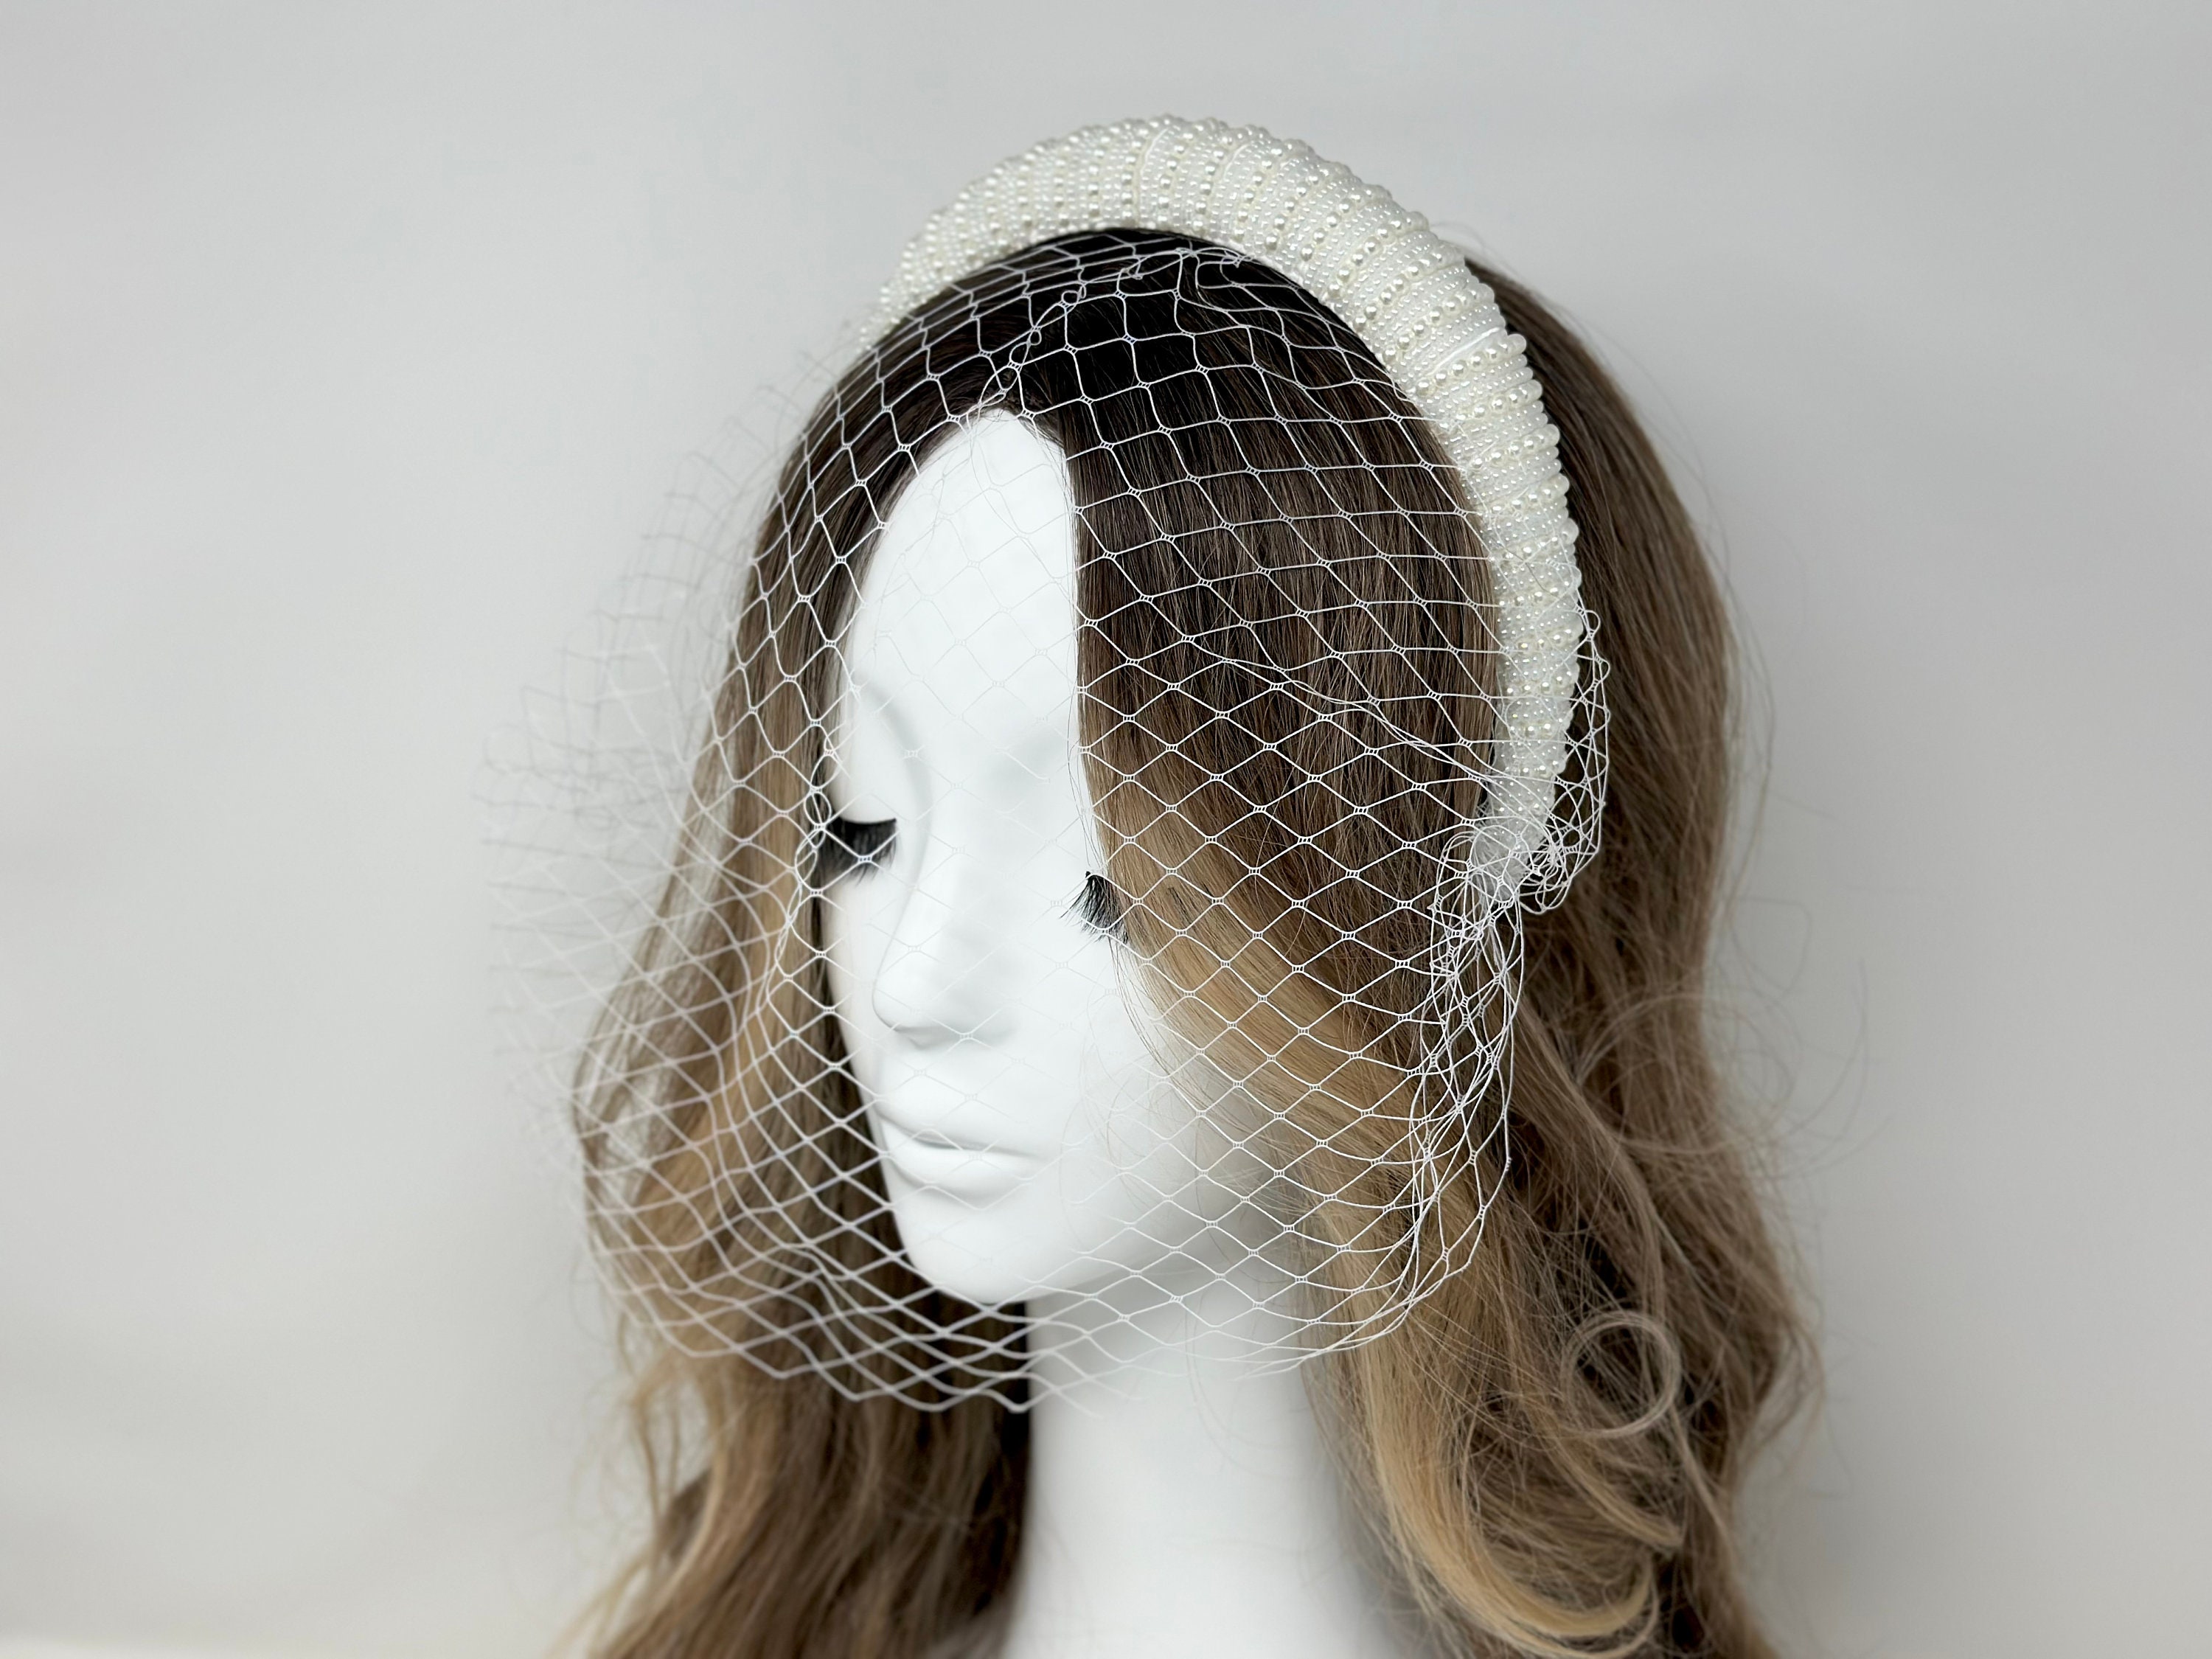 HYCYYFC Wedding Veil White Birdcage Veil for Bridal White Handmade Flowers  Wide Hair Band Headband Veil Vintage Wedding Accessories Fascinators (Color